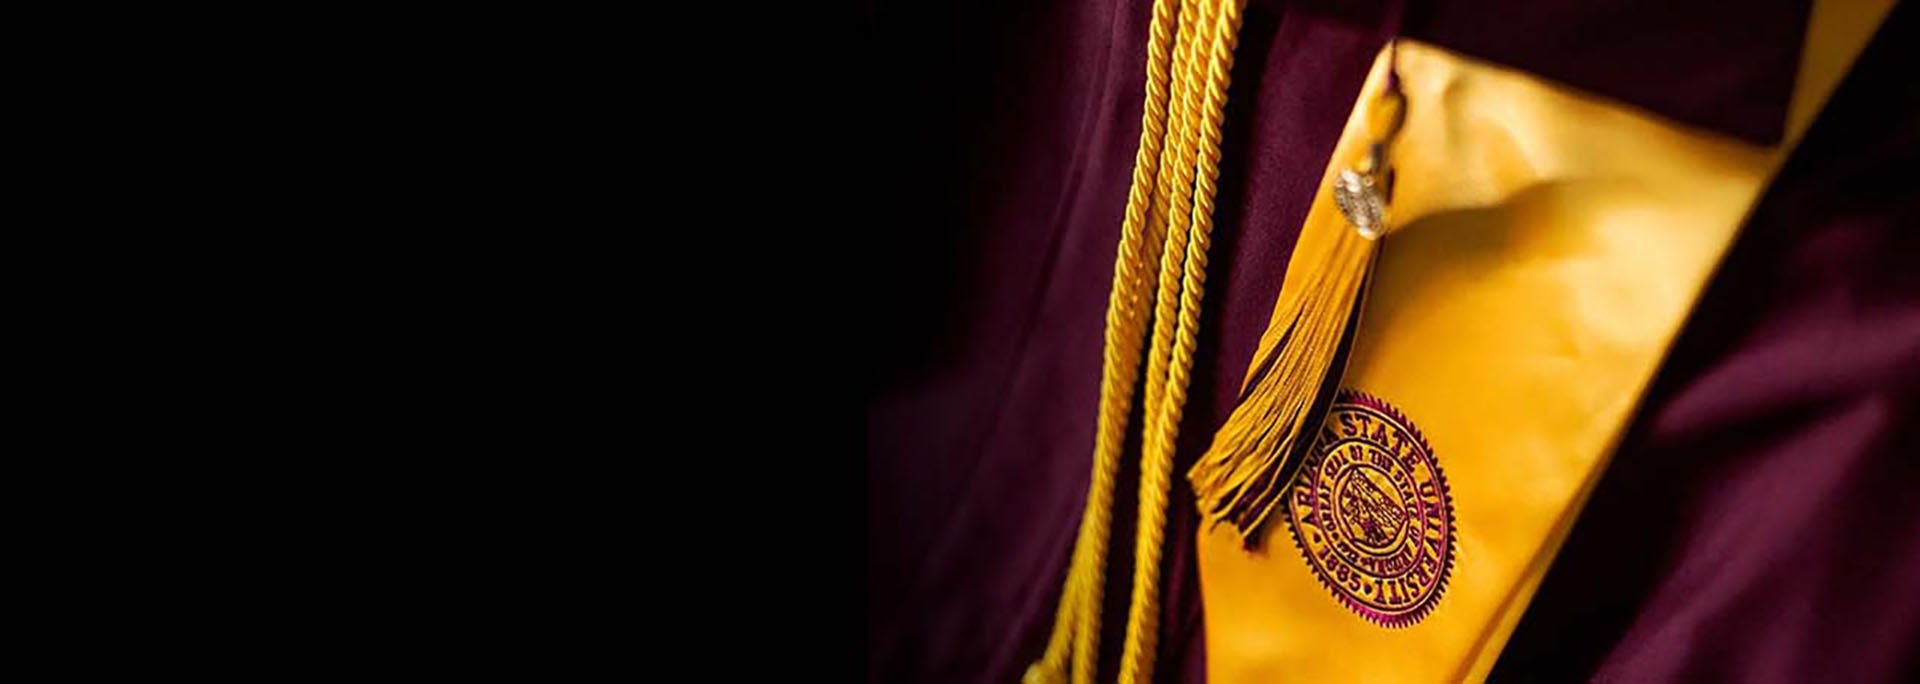 Arizona State University maroon and gold convocation regalia